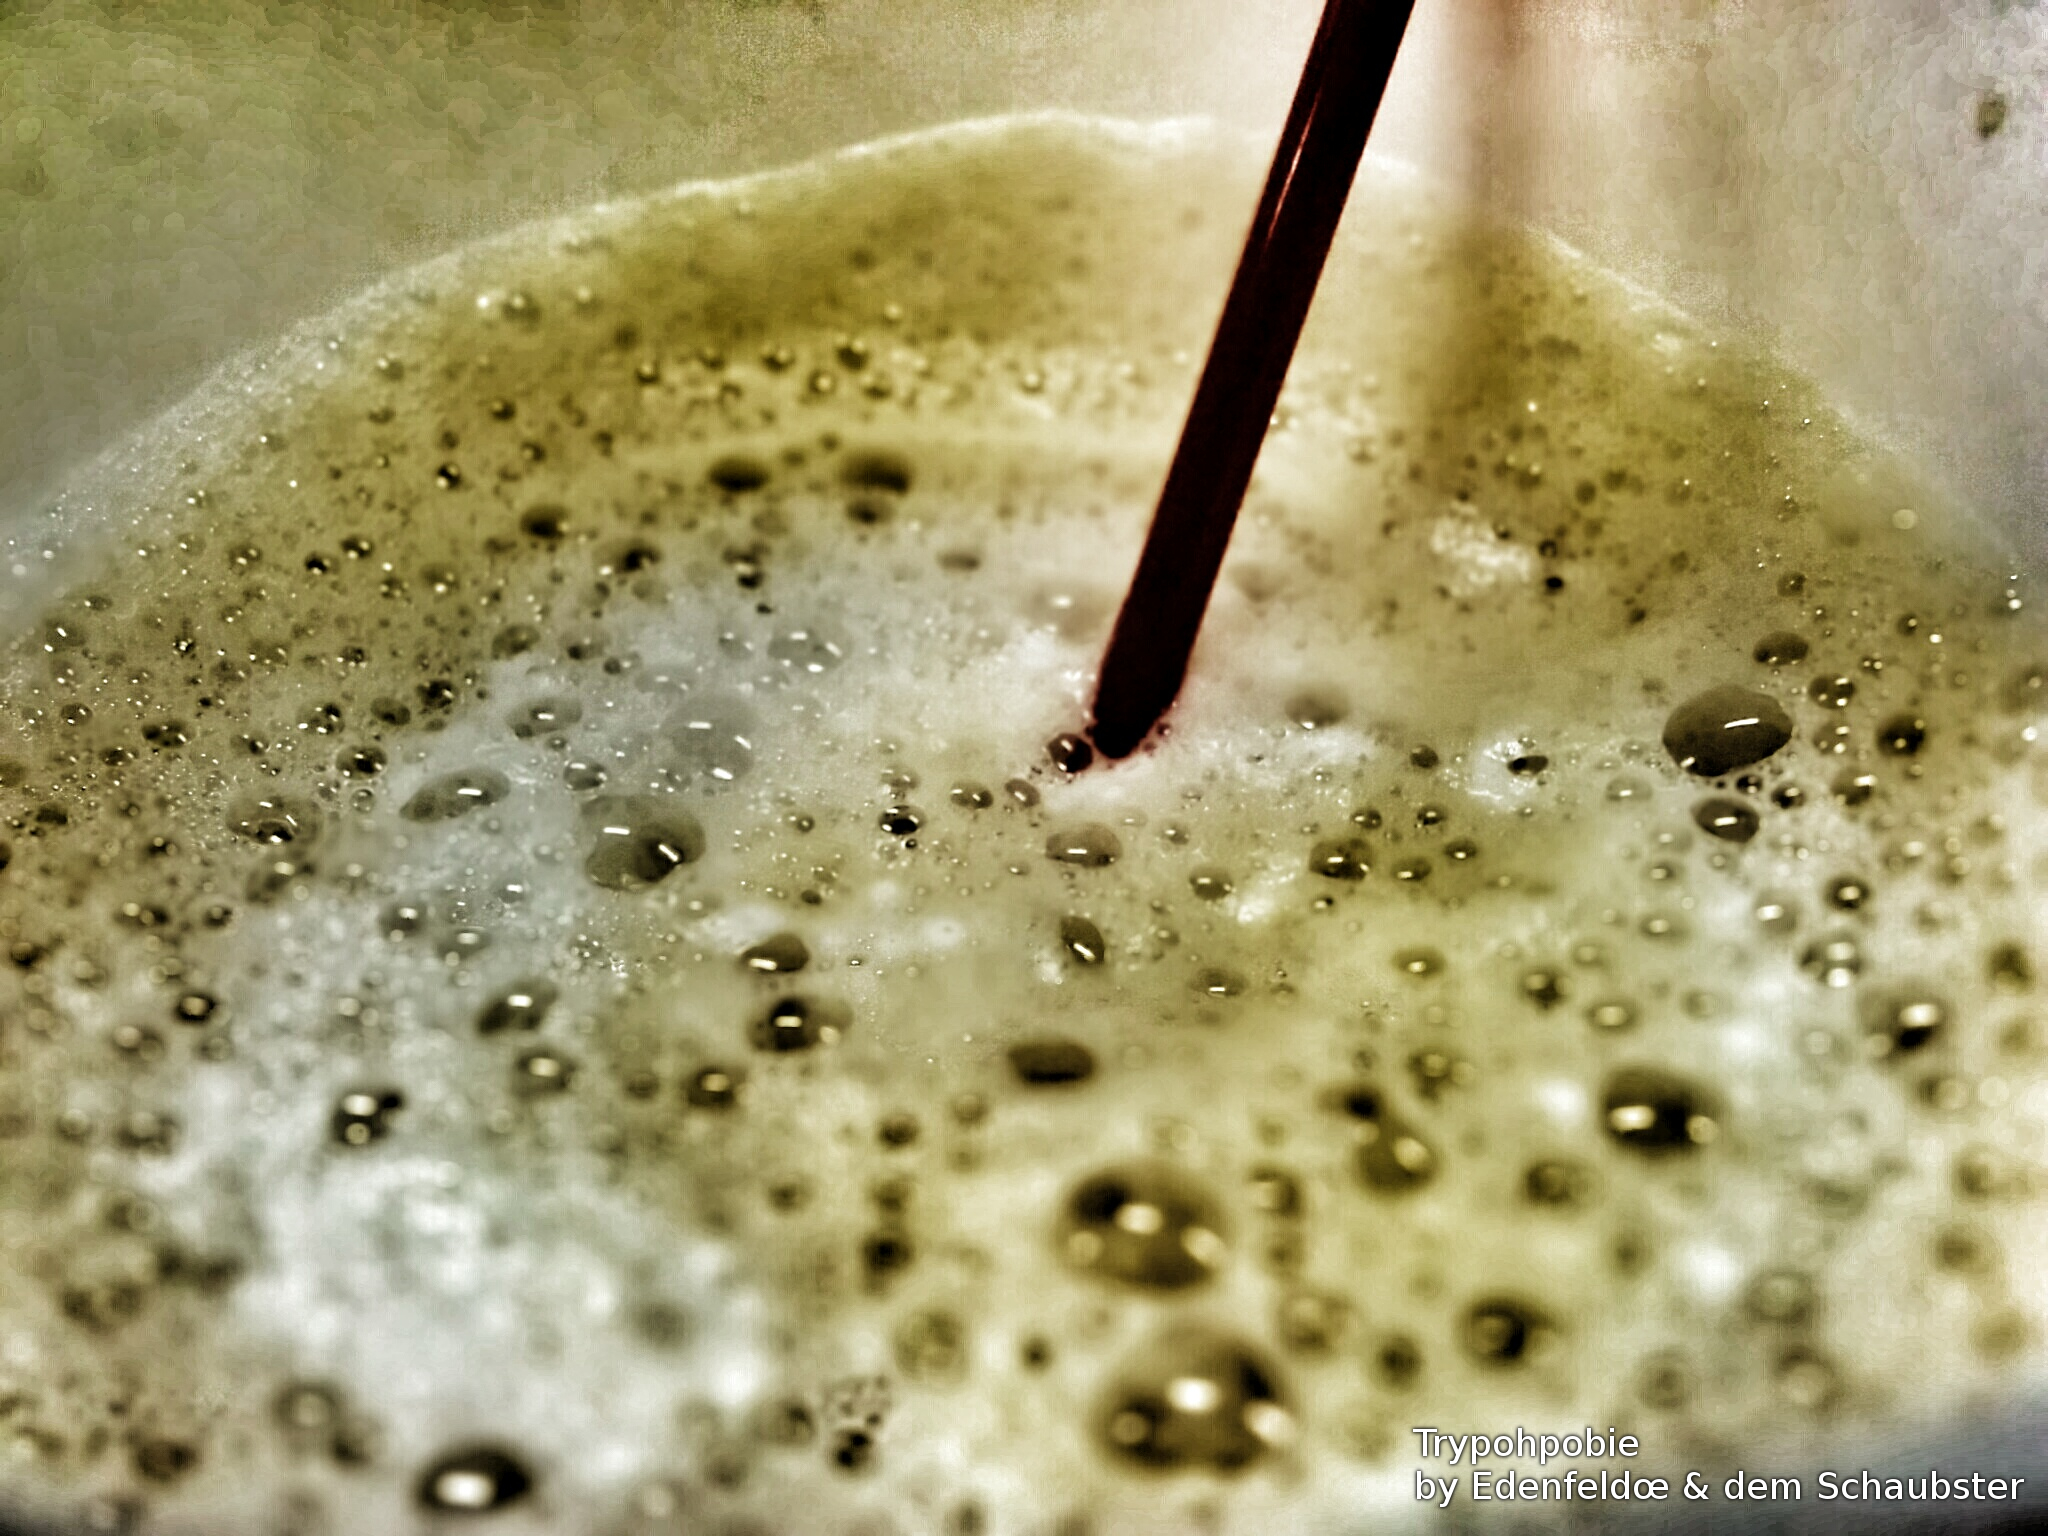 Closeup image of milk foam bubbles.